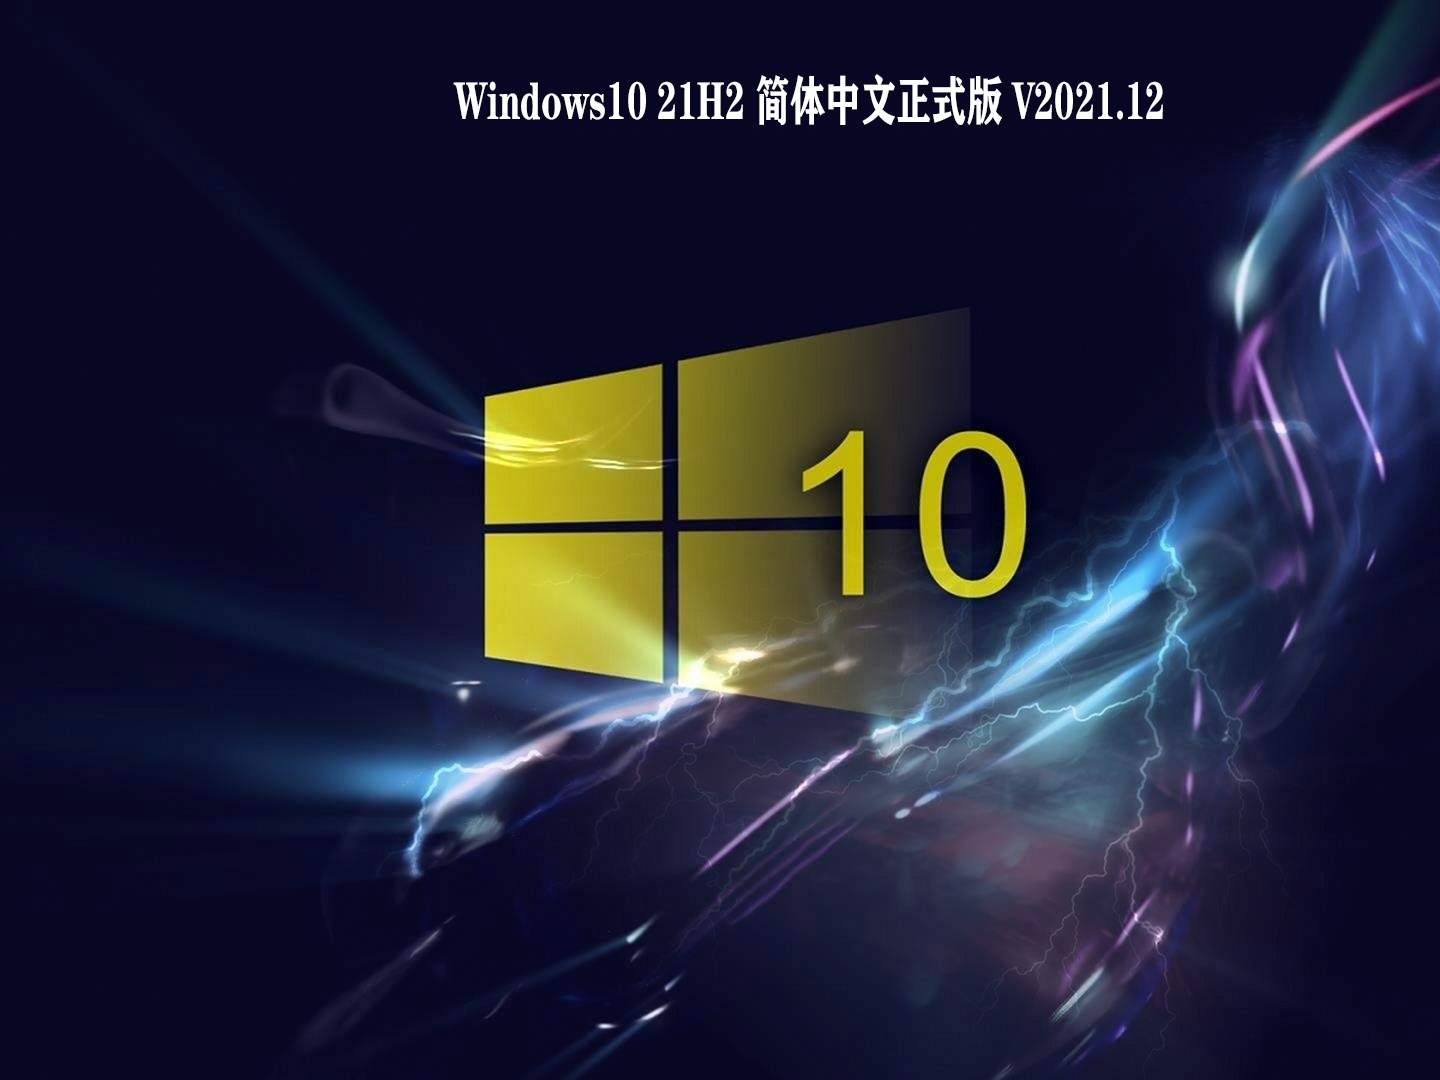 Windows10 21H2 简体中文正式版 V2021.12